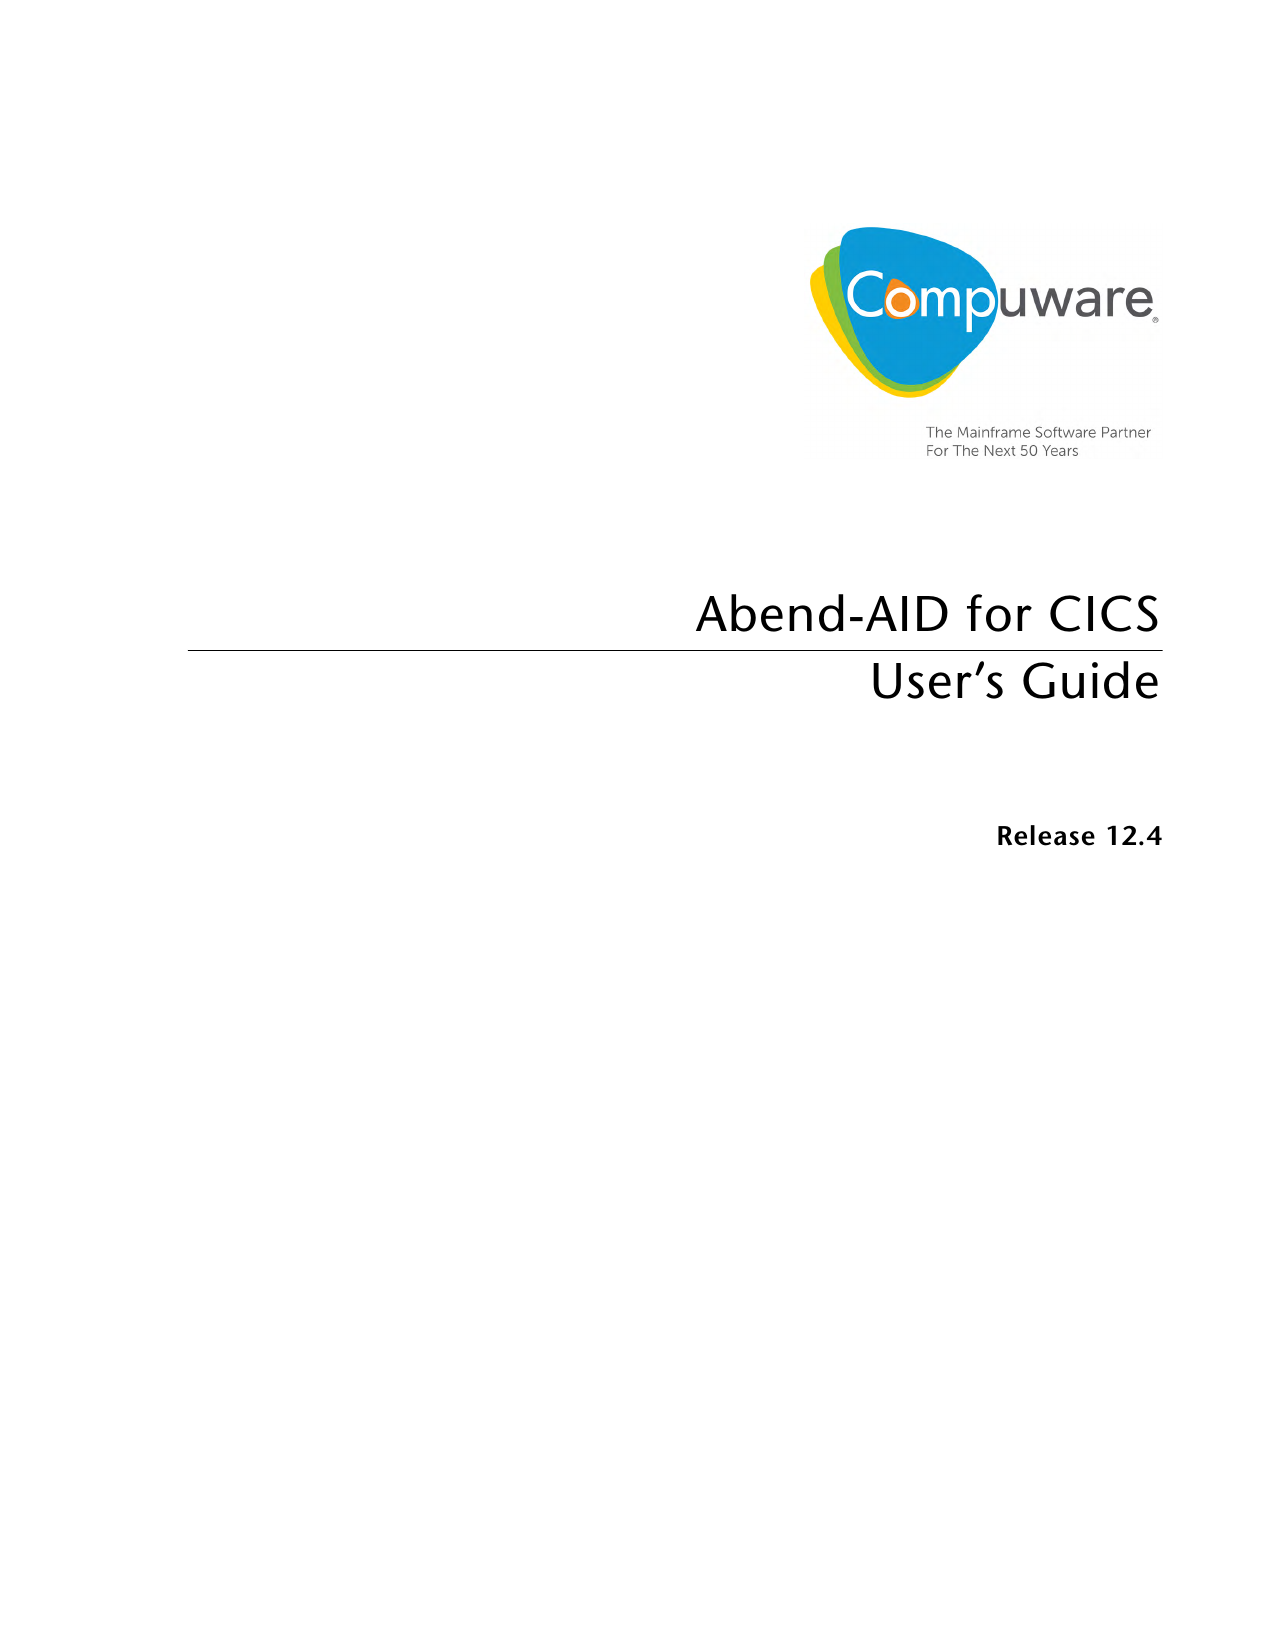 cics abend codes manual